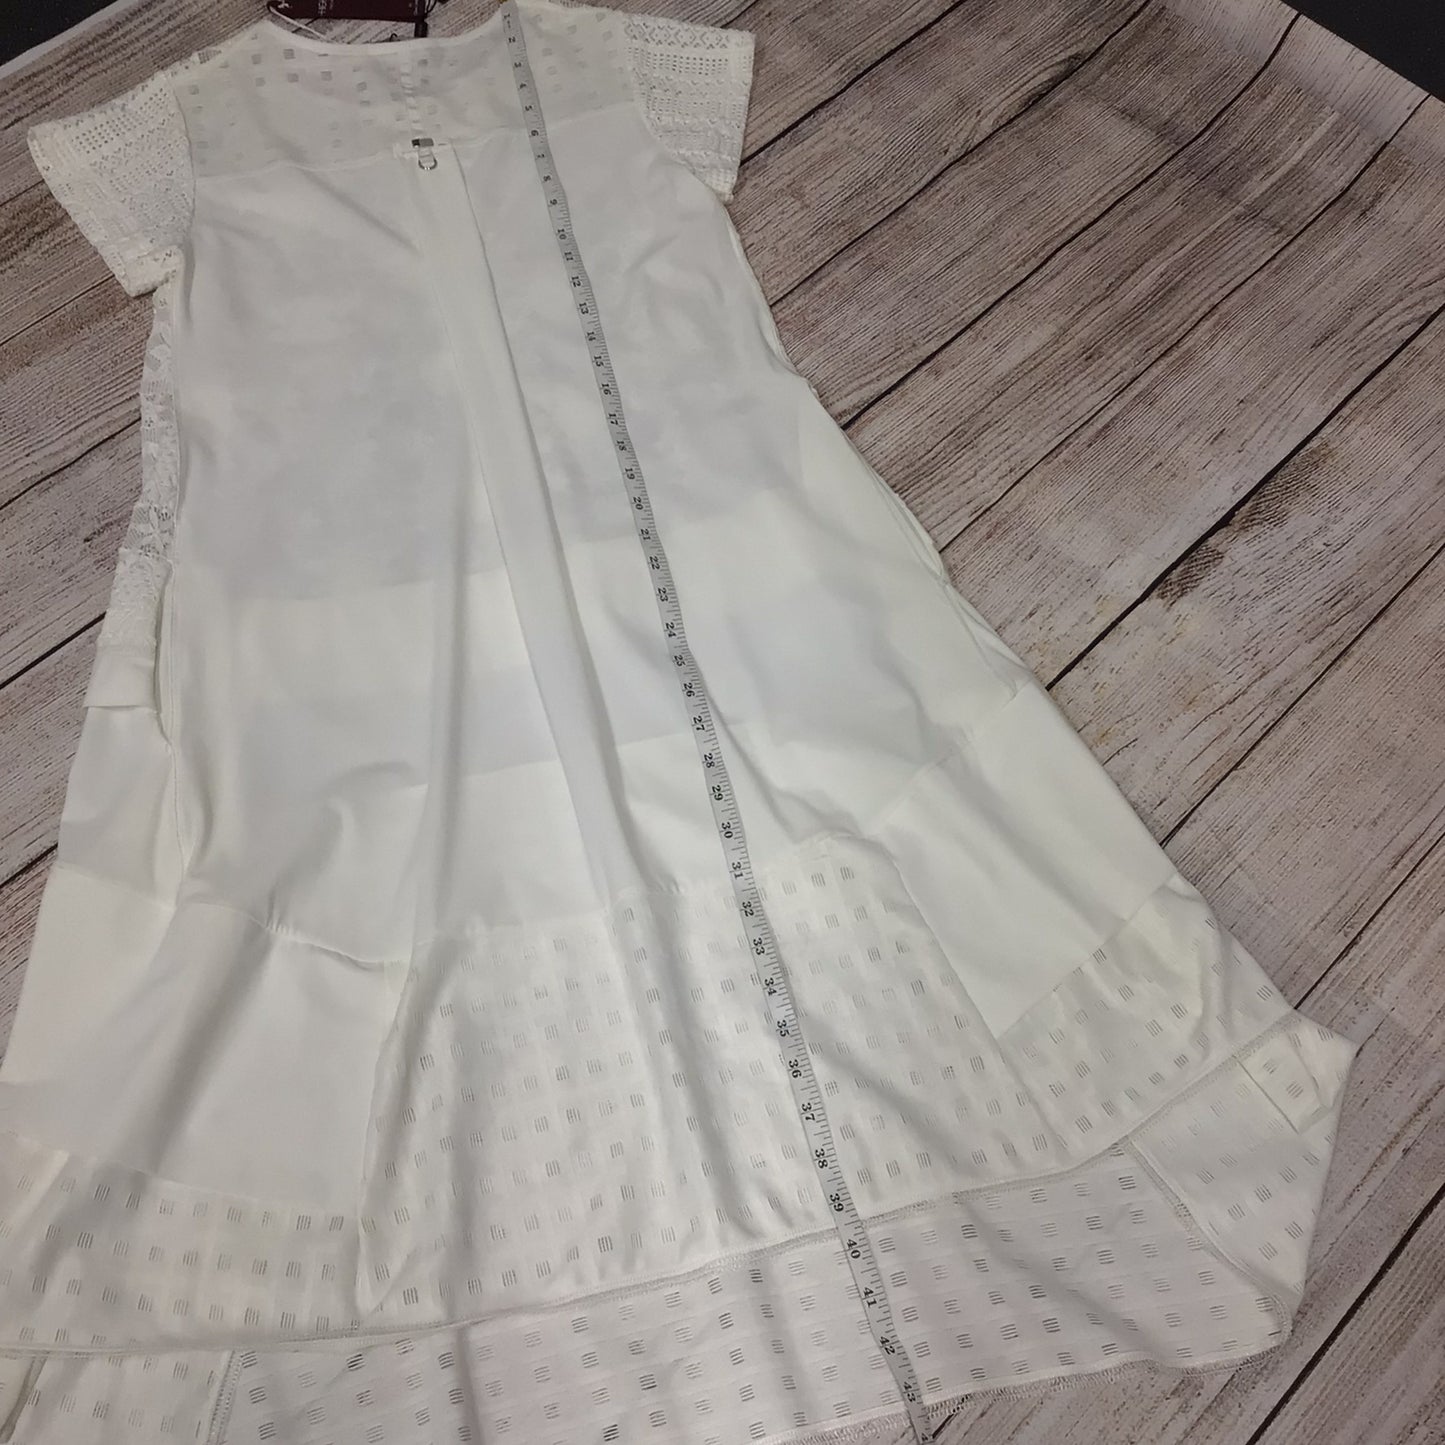 BNWT High Tech Abito Donna Cream Lace Dress w/Pockets Size 12